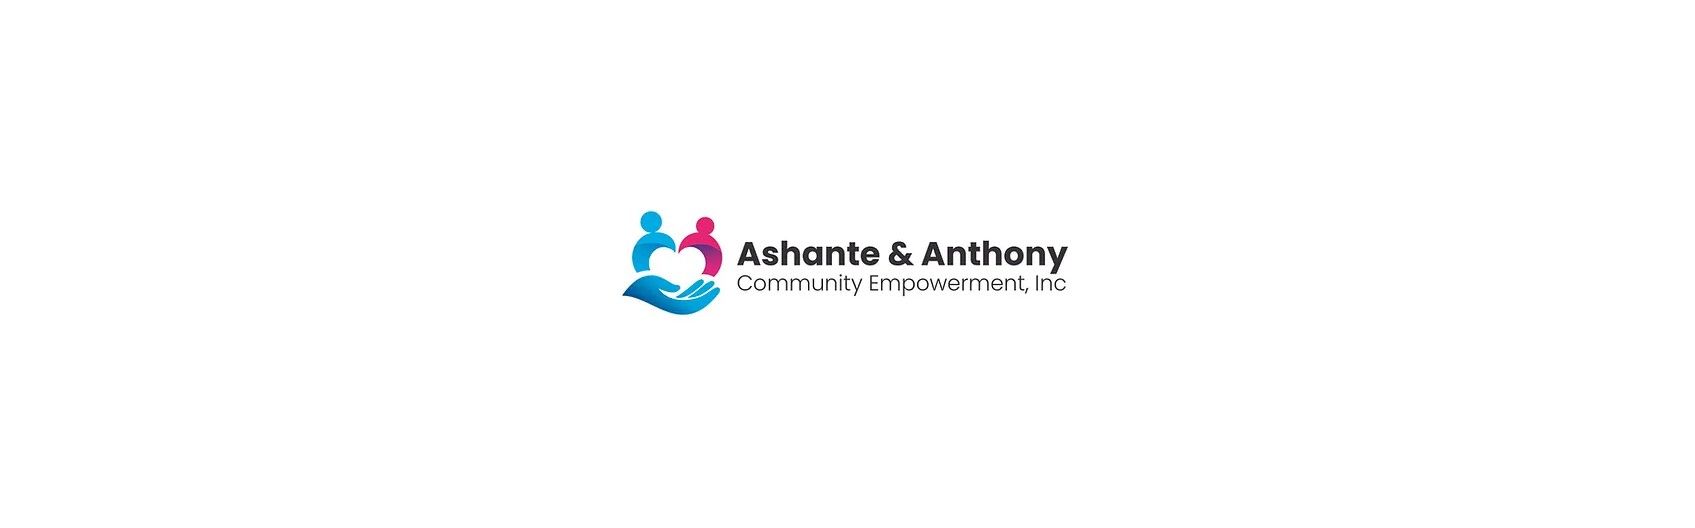 Ashante & Anthony Community Empowerment - Wonda Billingsley